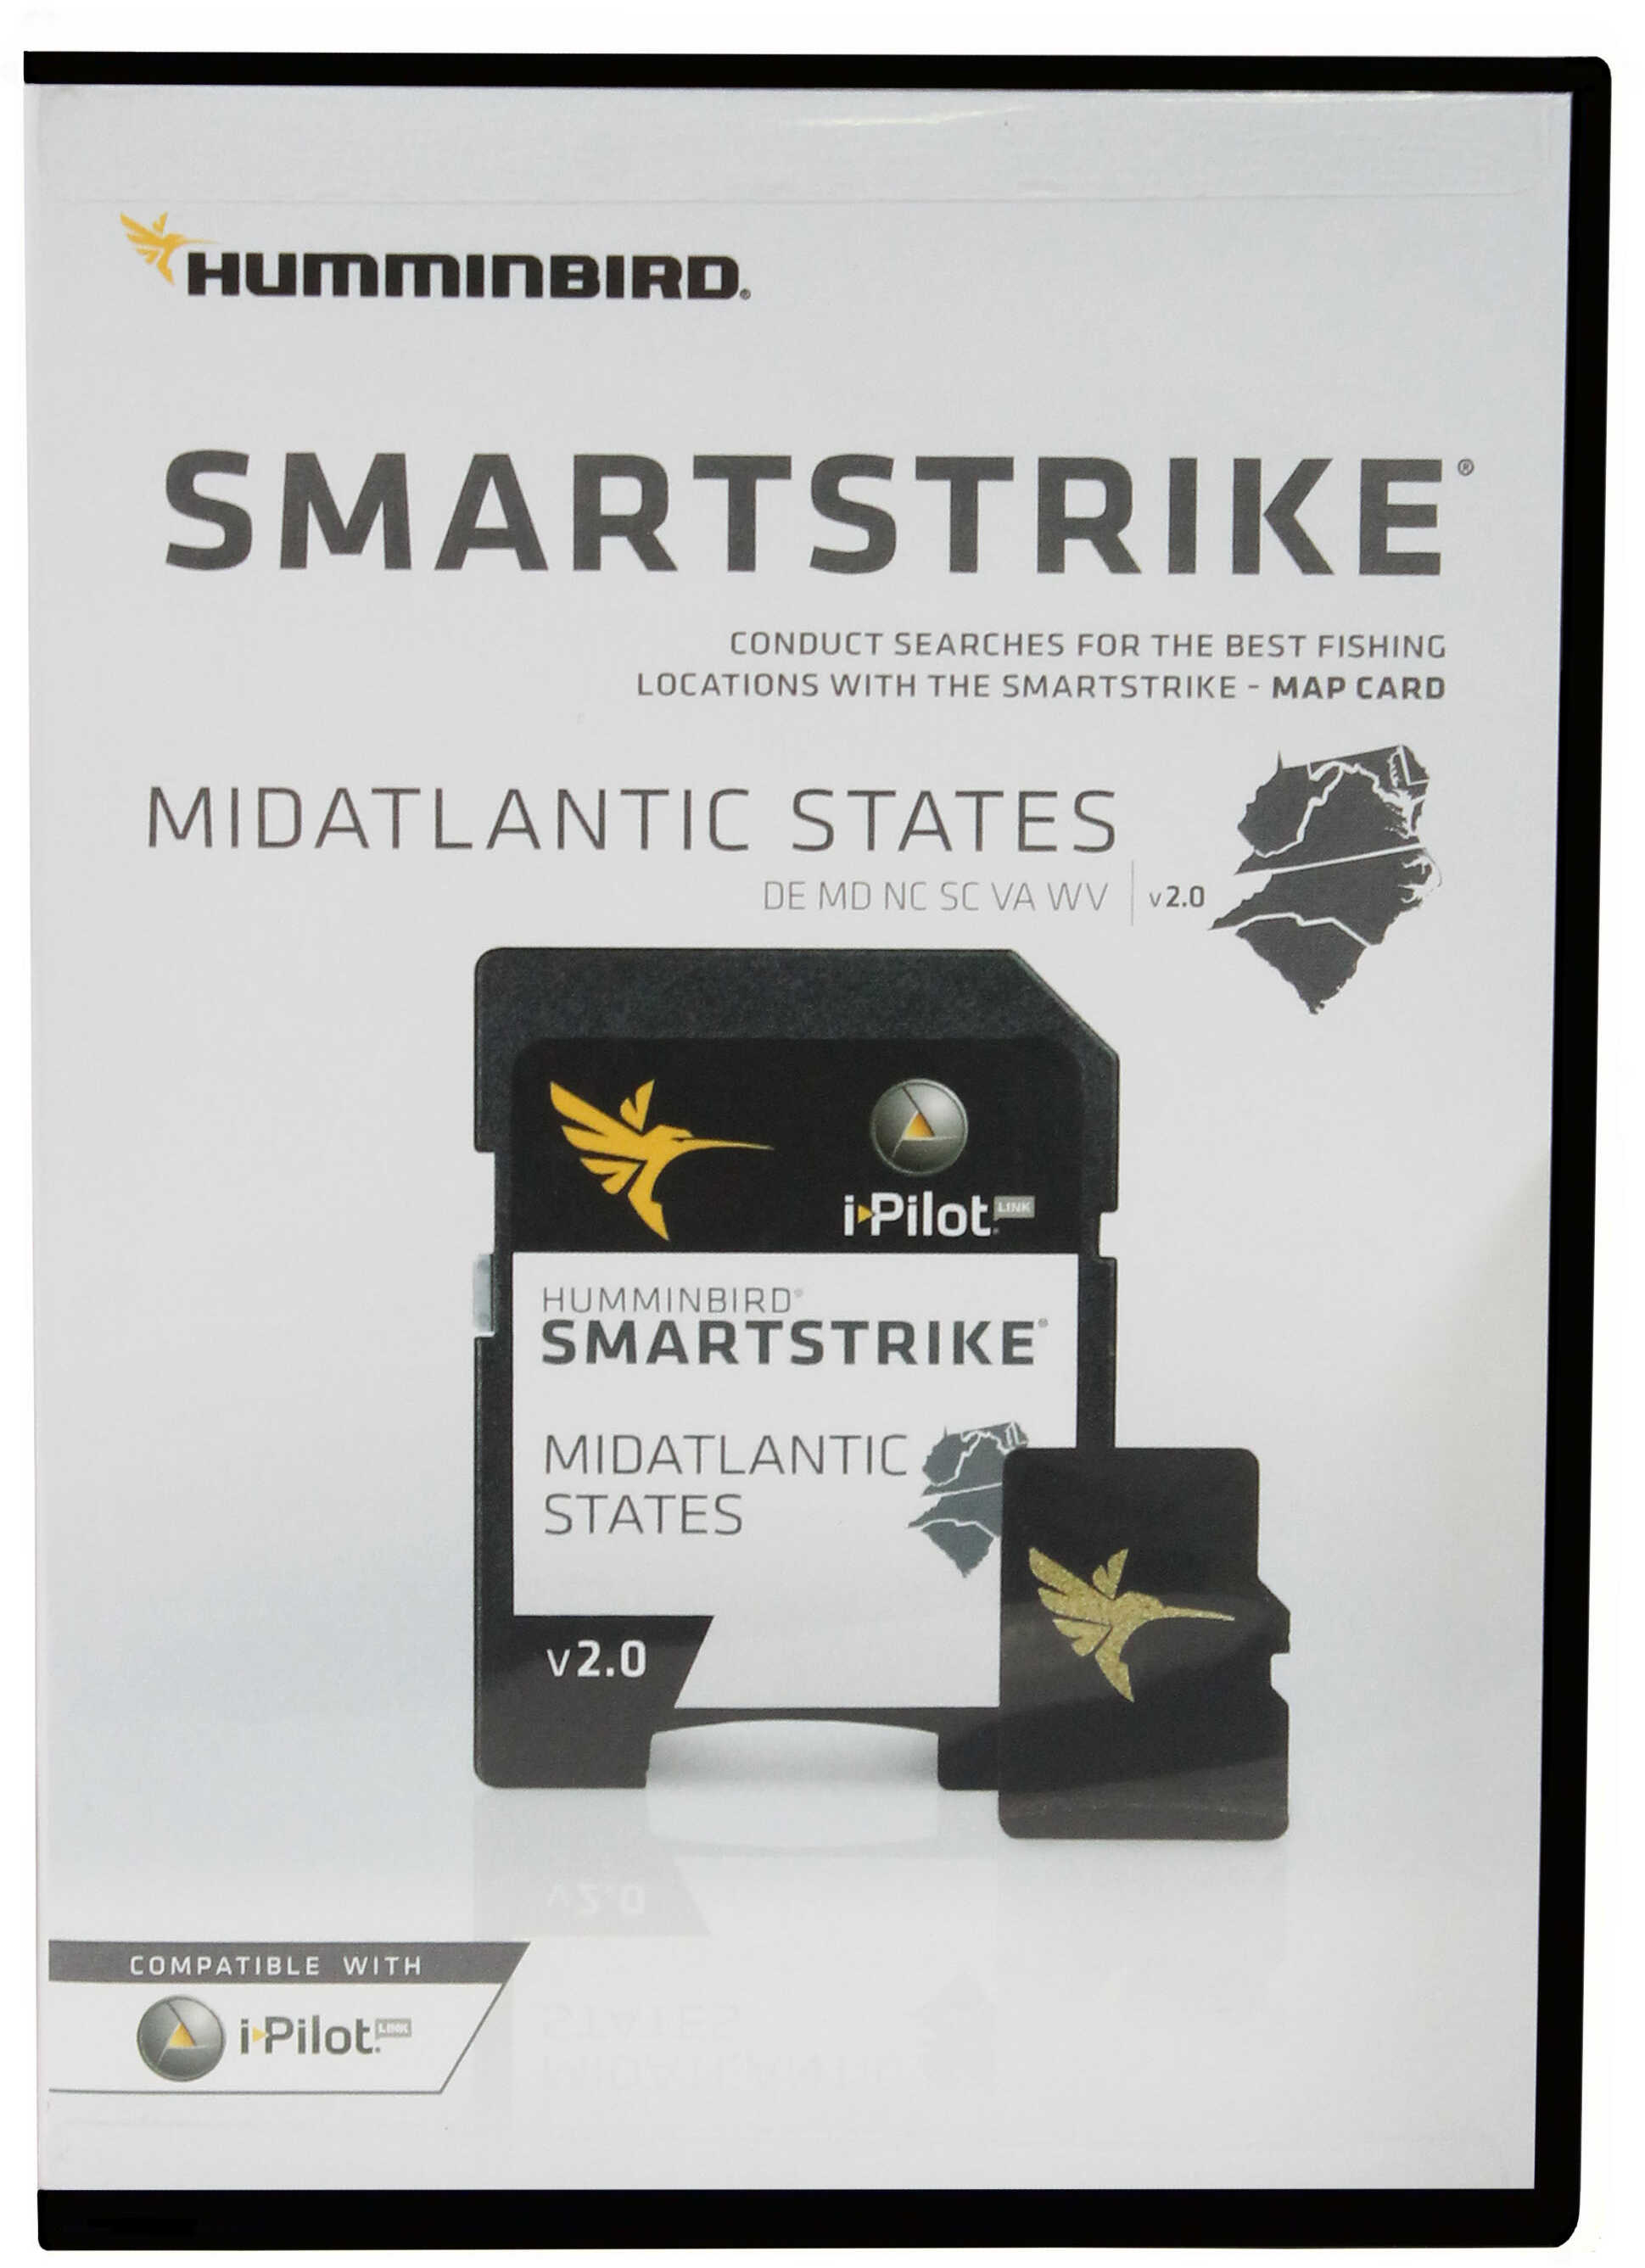 Humminbird Smart Strike Mid Atlantic States, March 2017 Md: 600047-2